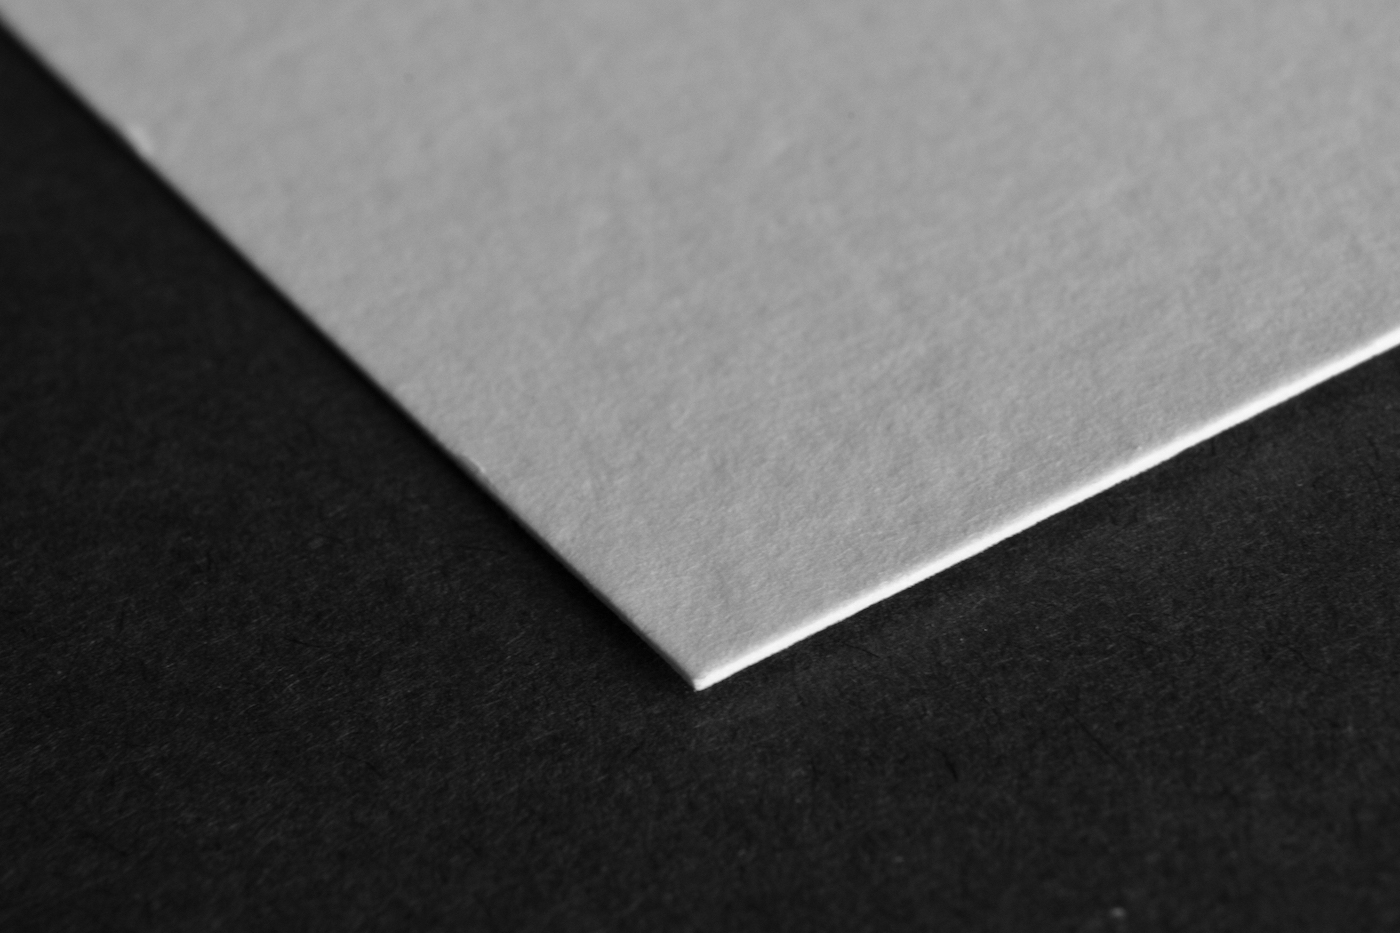 Cougar White Digital SUPER SMOOTH Color Copy Paper